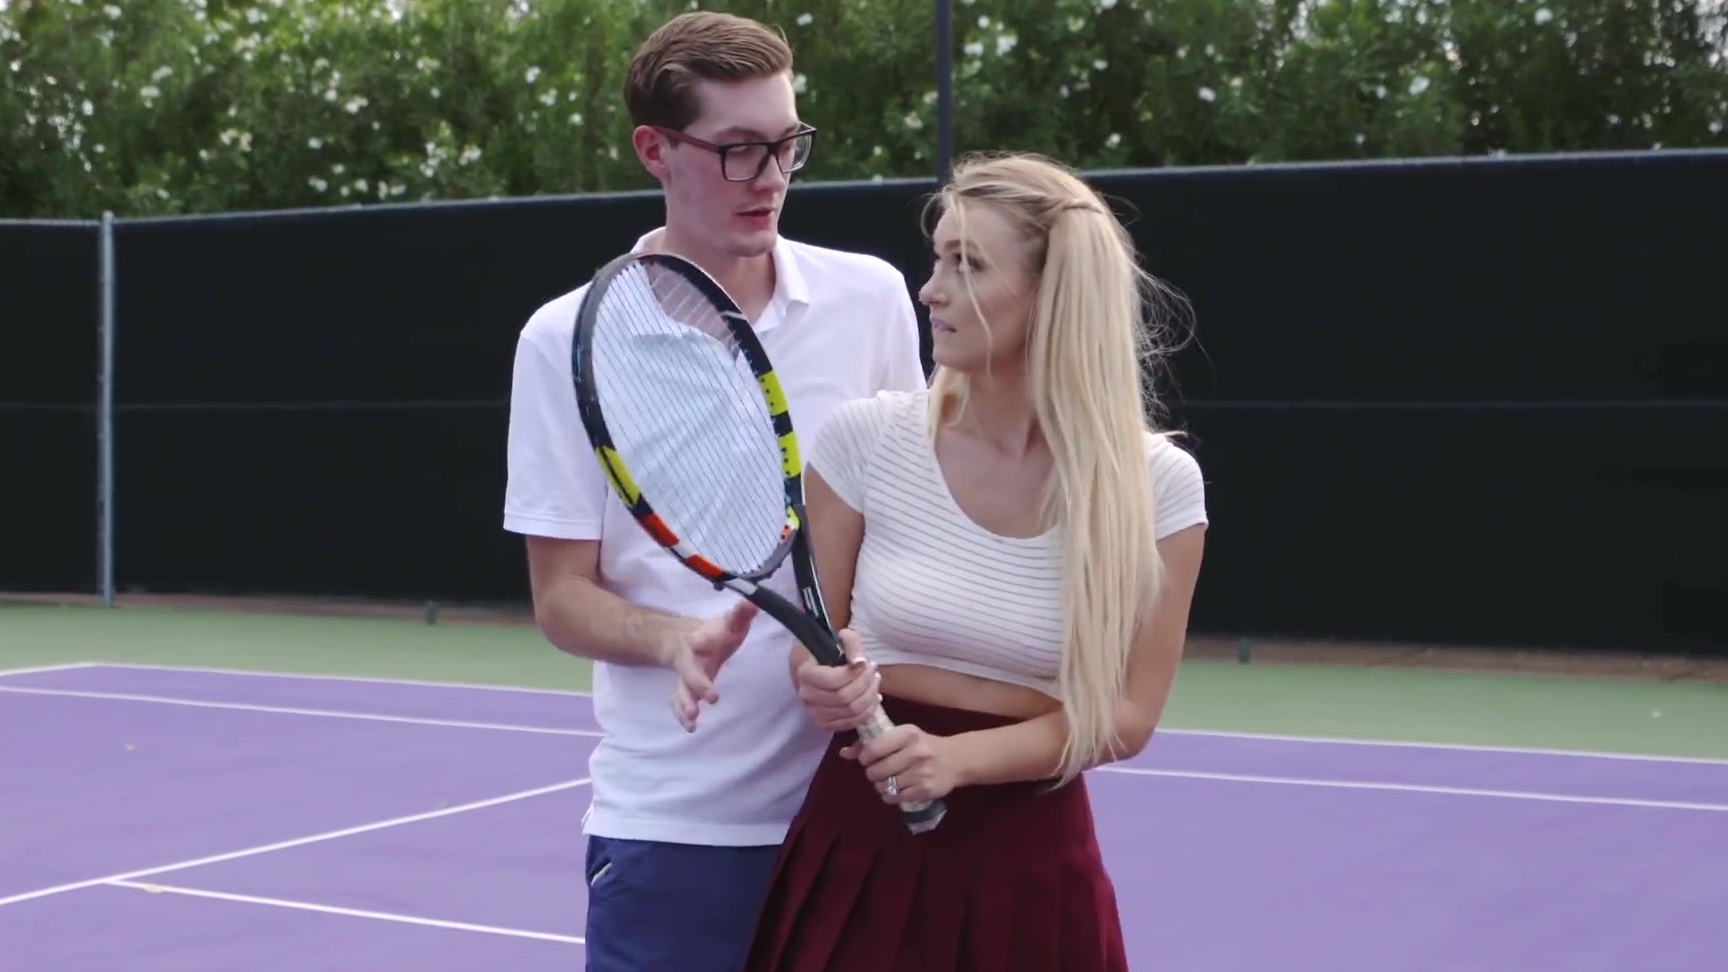 Ball Boy Fucks A Milf On The Tennis Court - Natalia Starr gets fucked on the tennis court by her coach (Buddy ...